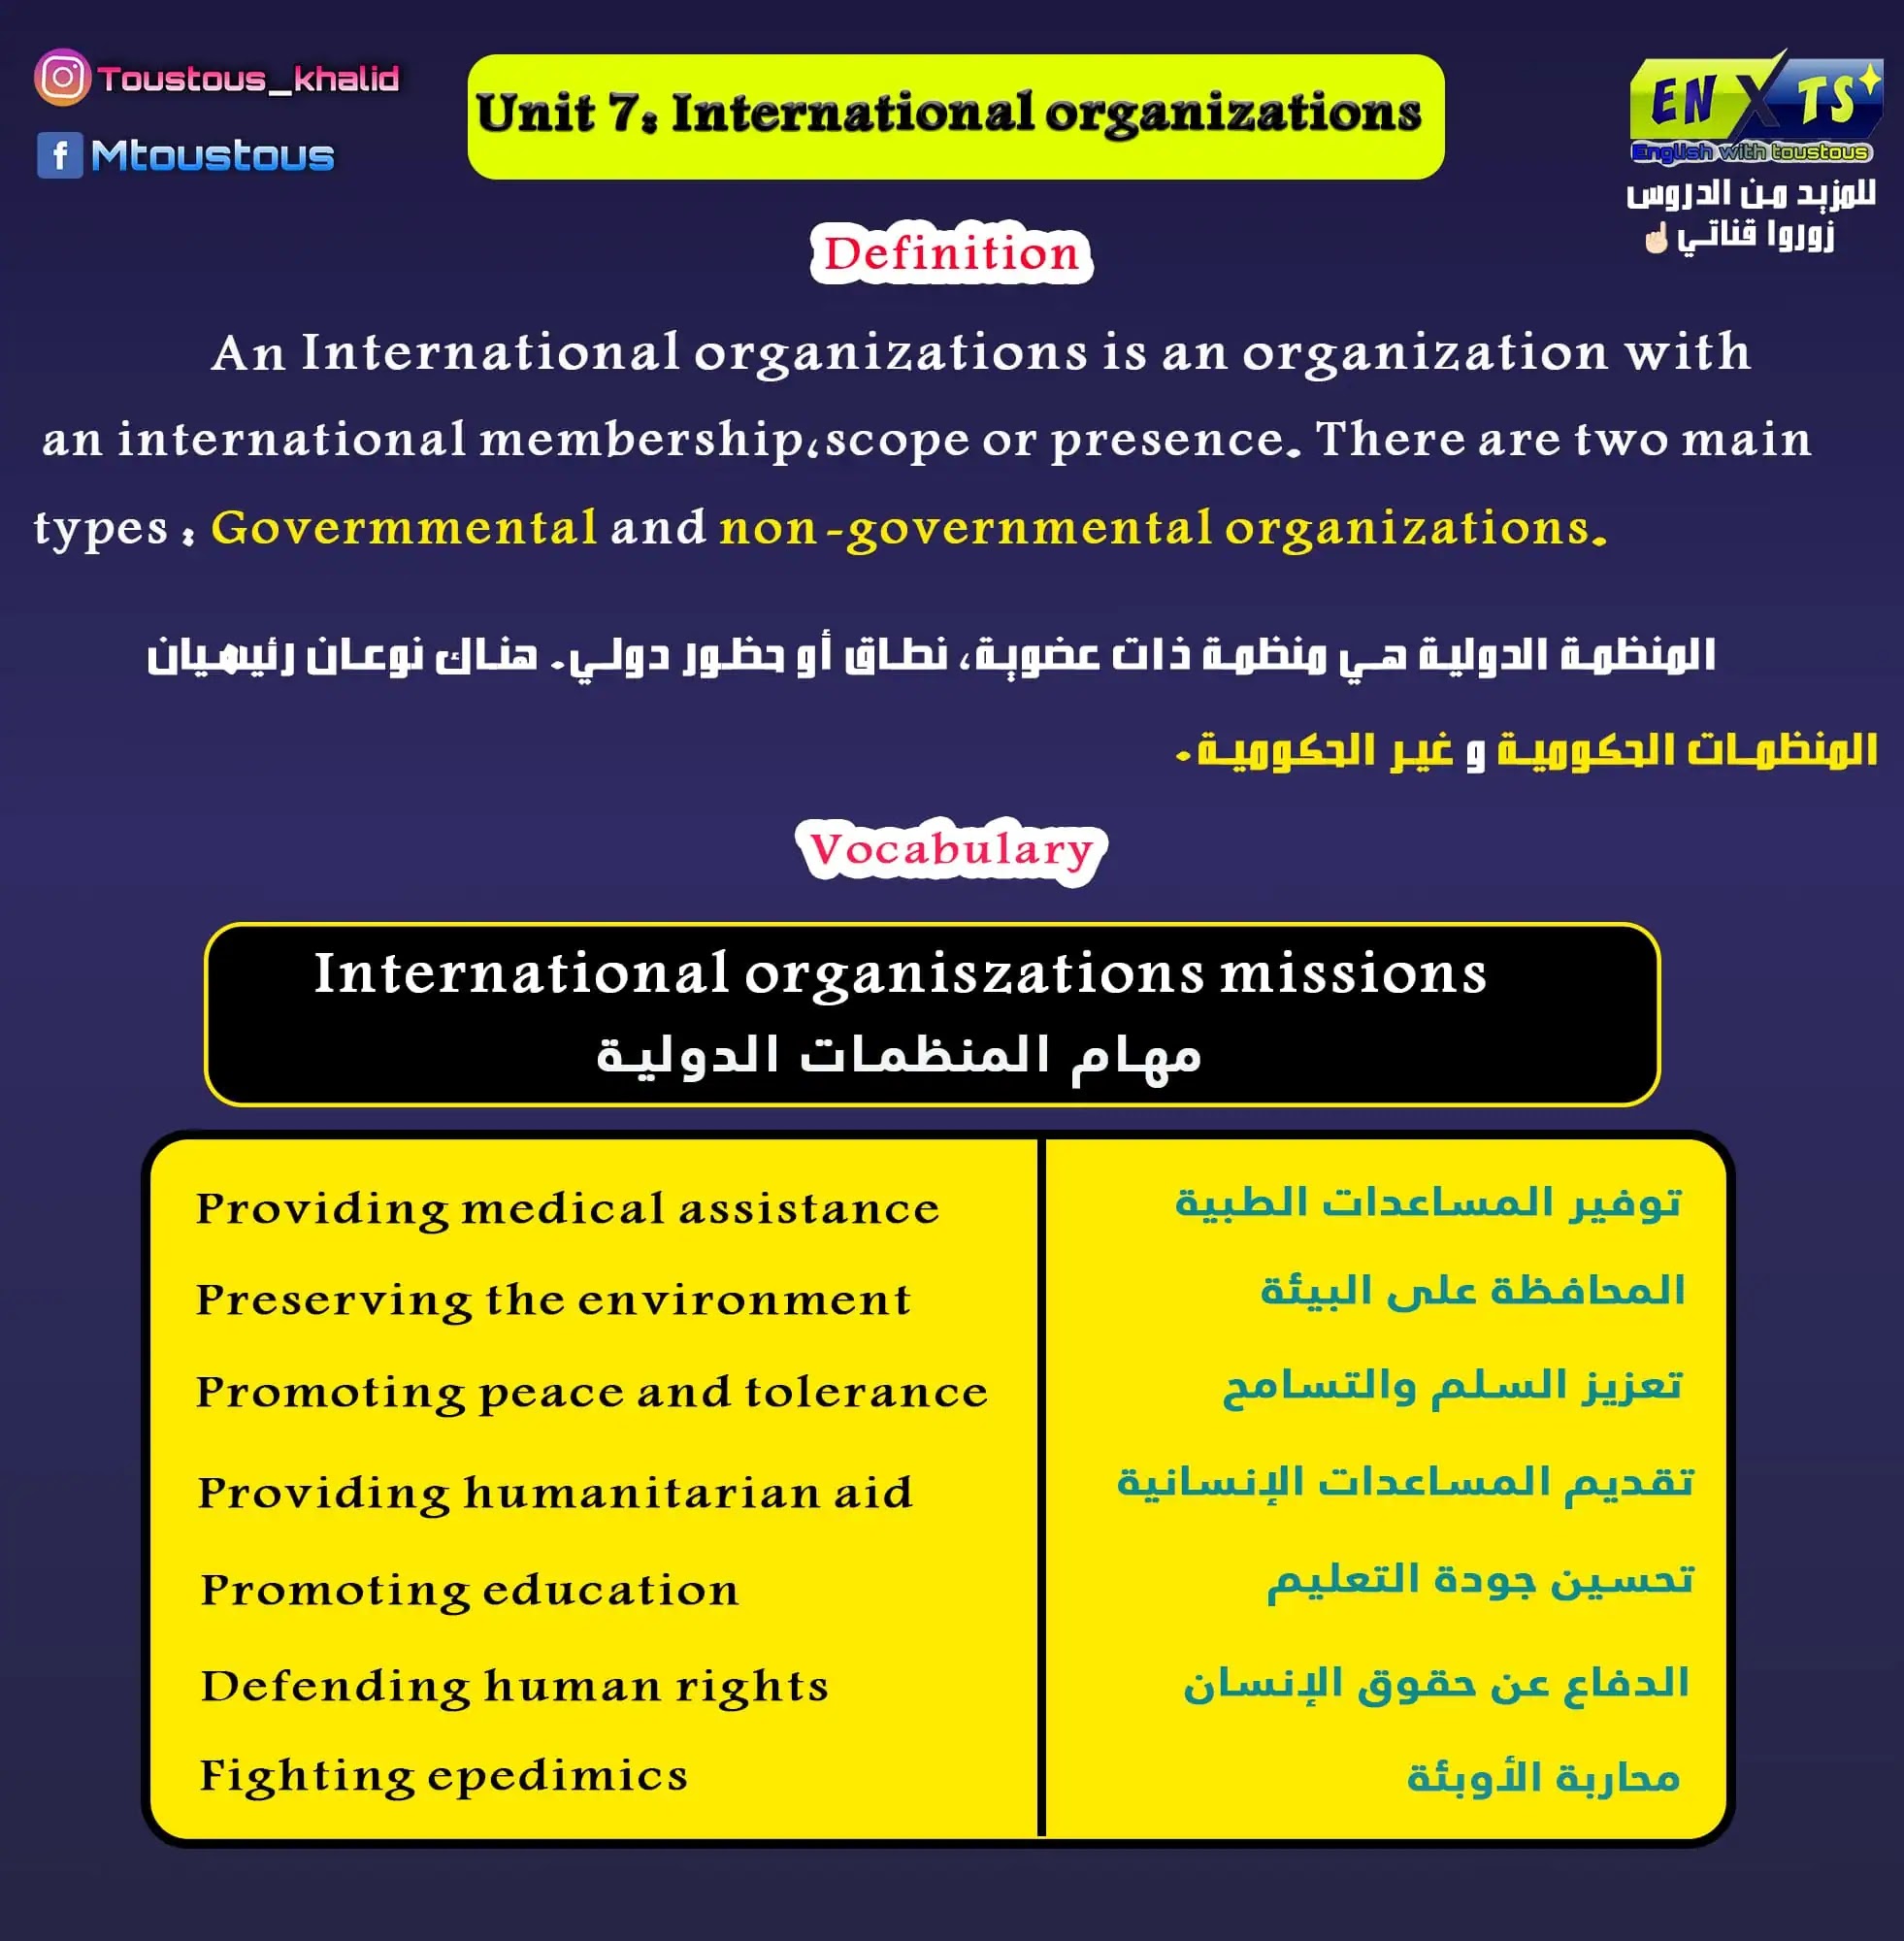 unit 7: International organization